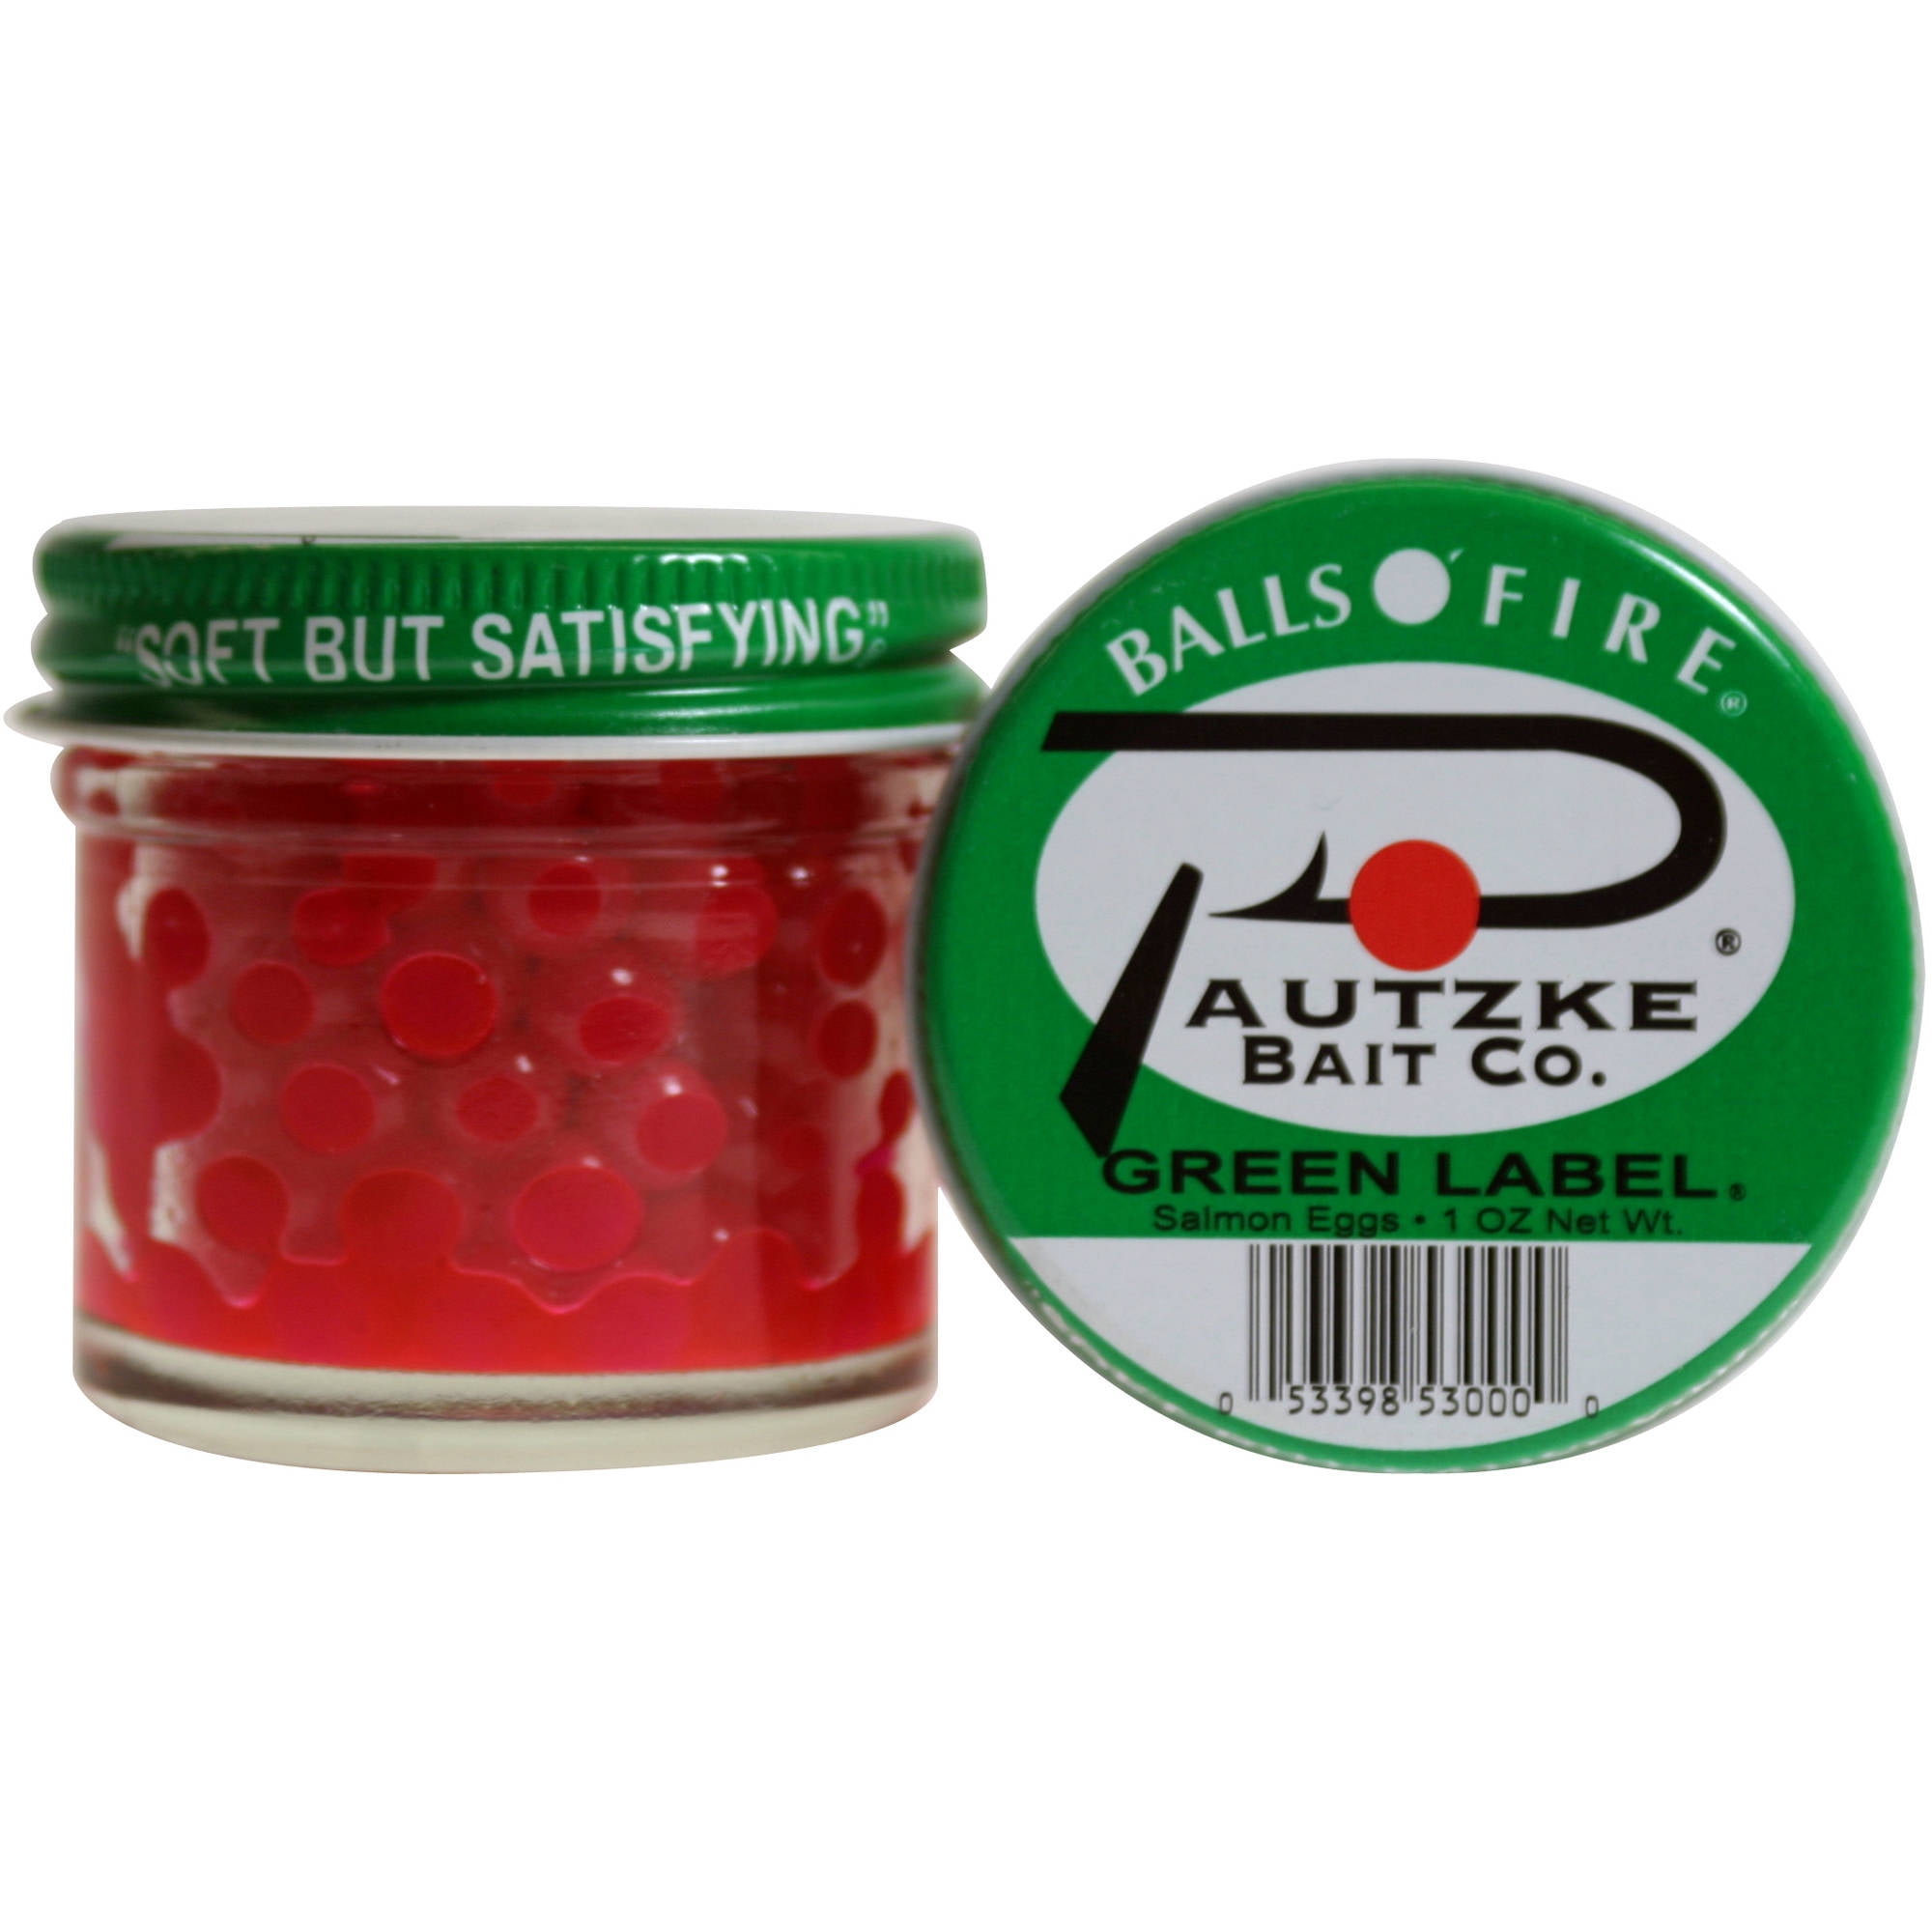 Pautzke Balls O’ Fire Salmon Eggs – Green Label 1 oz